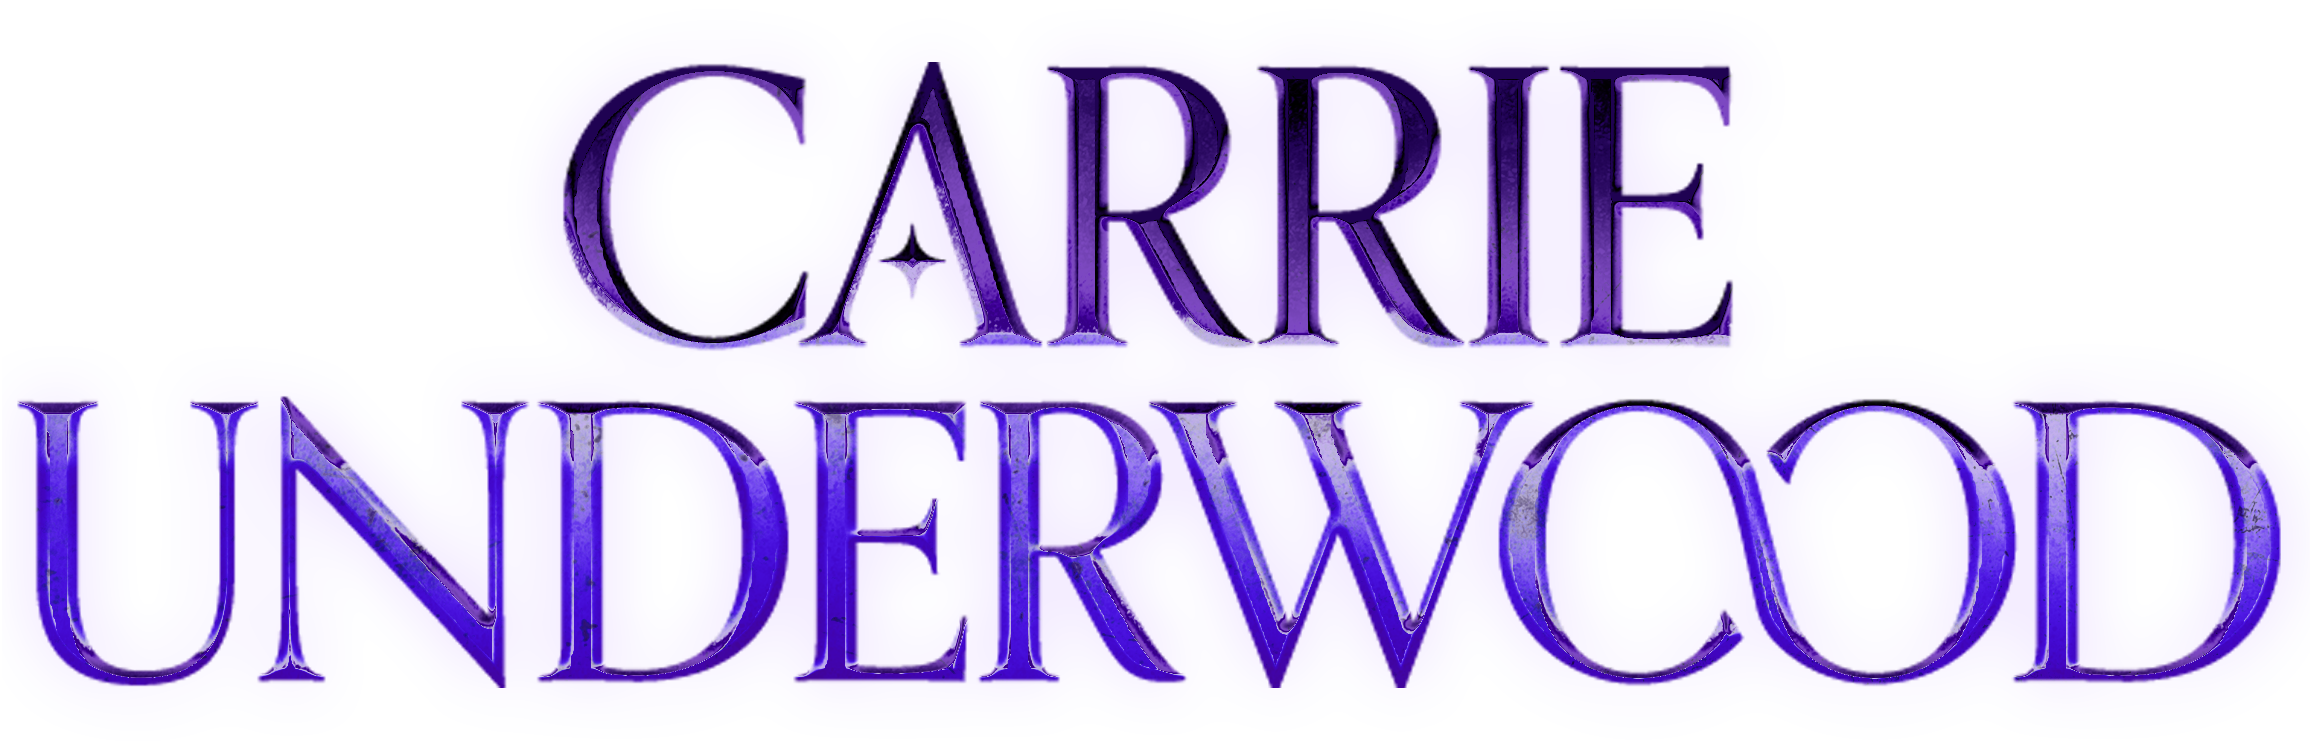 carrie underwood tour logo